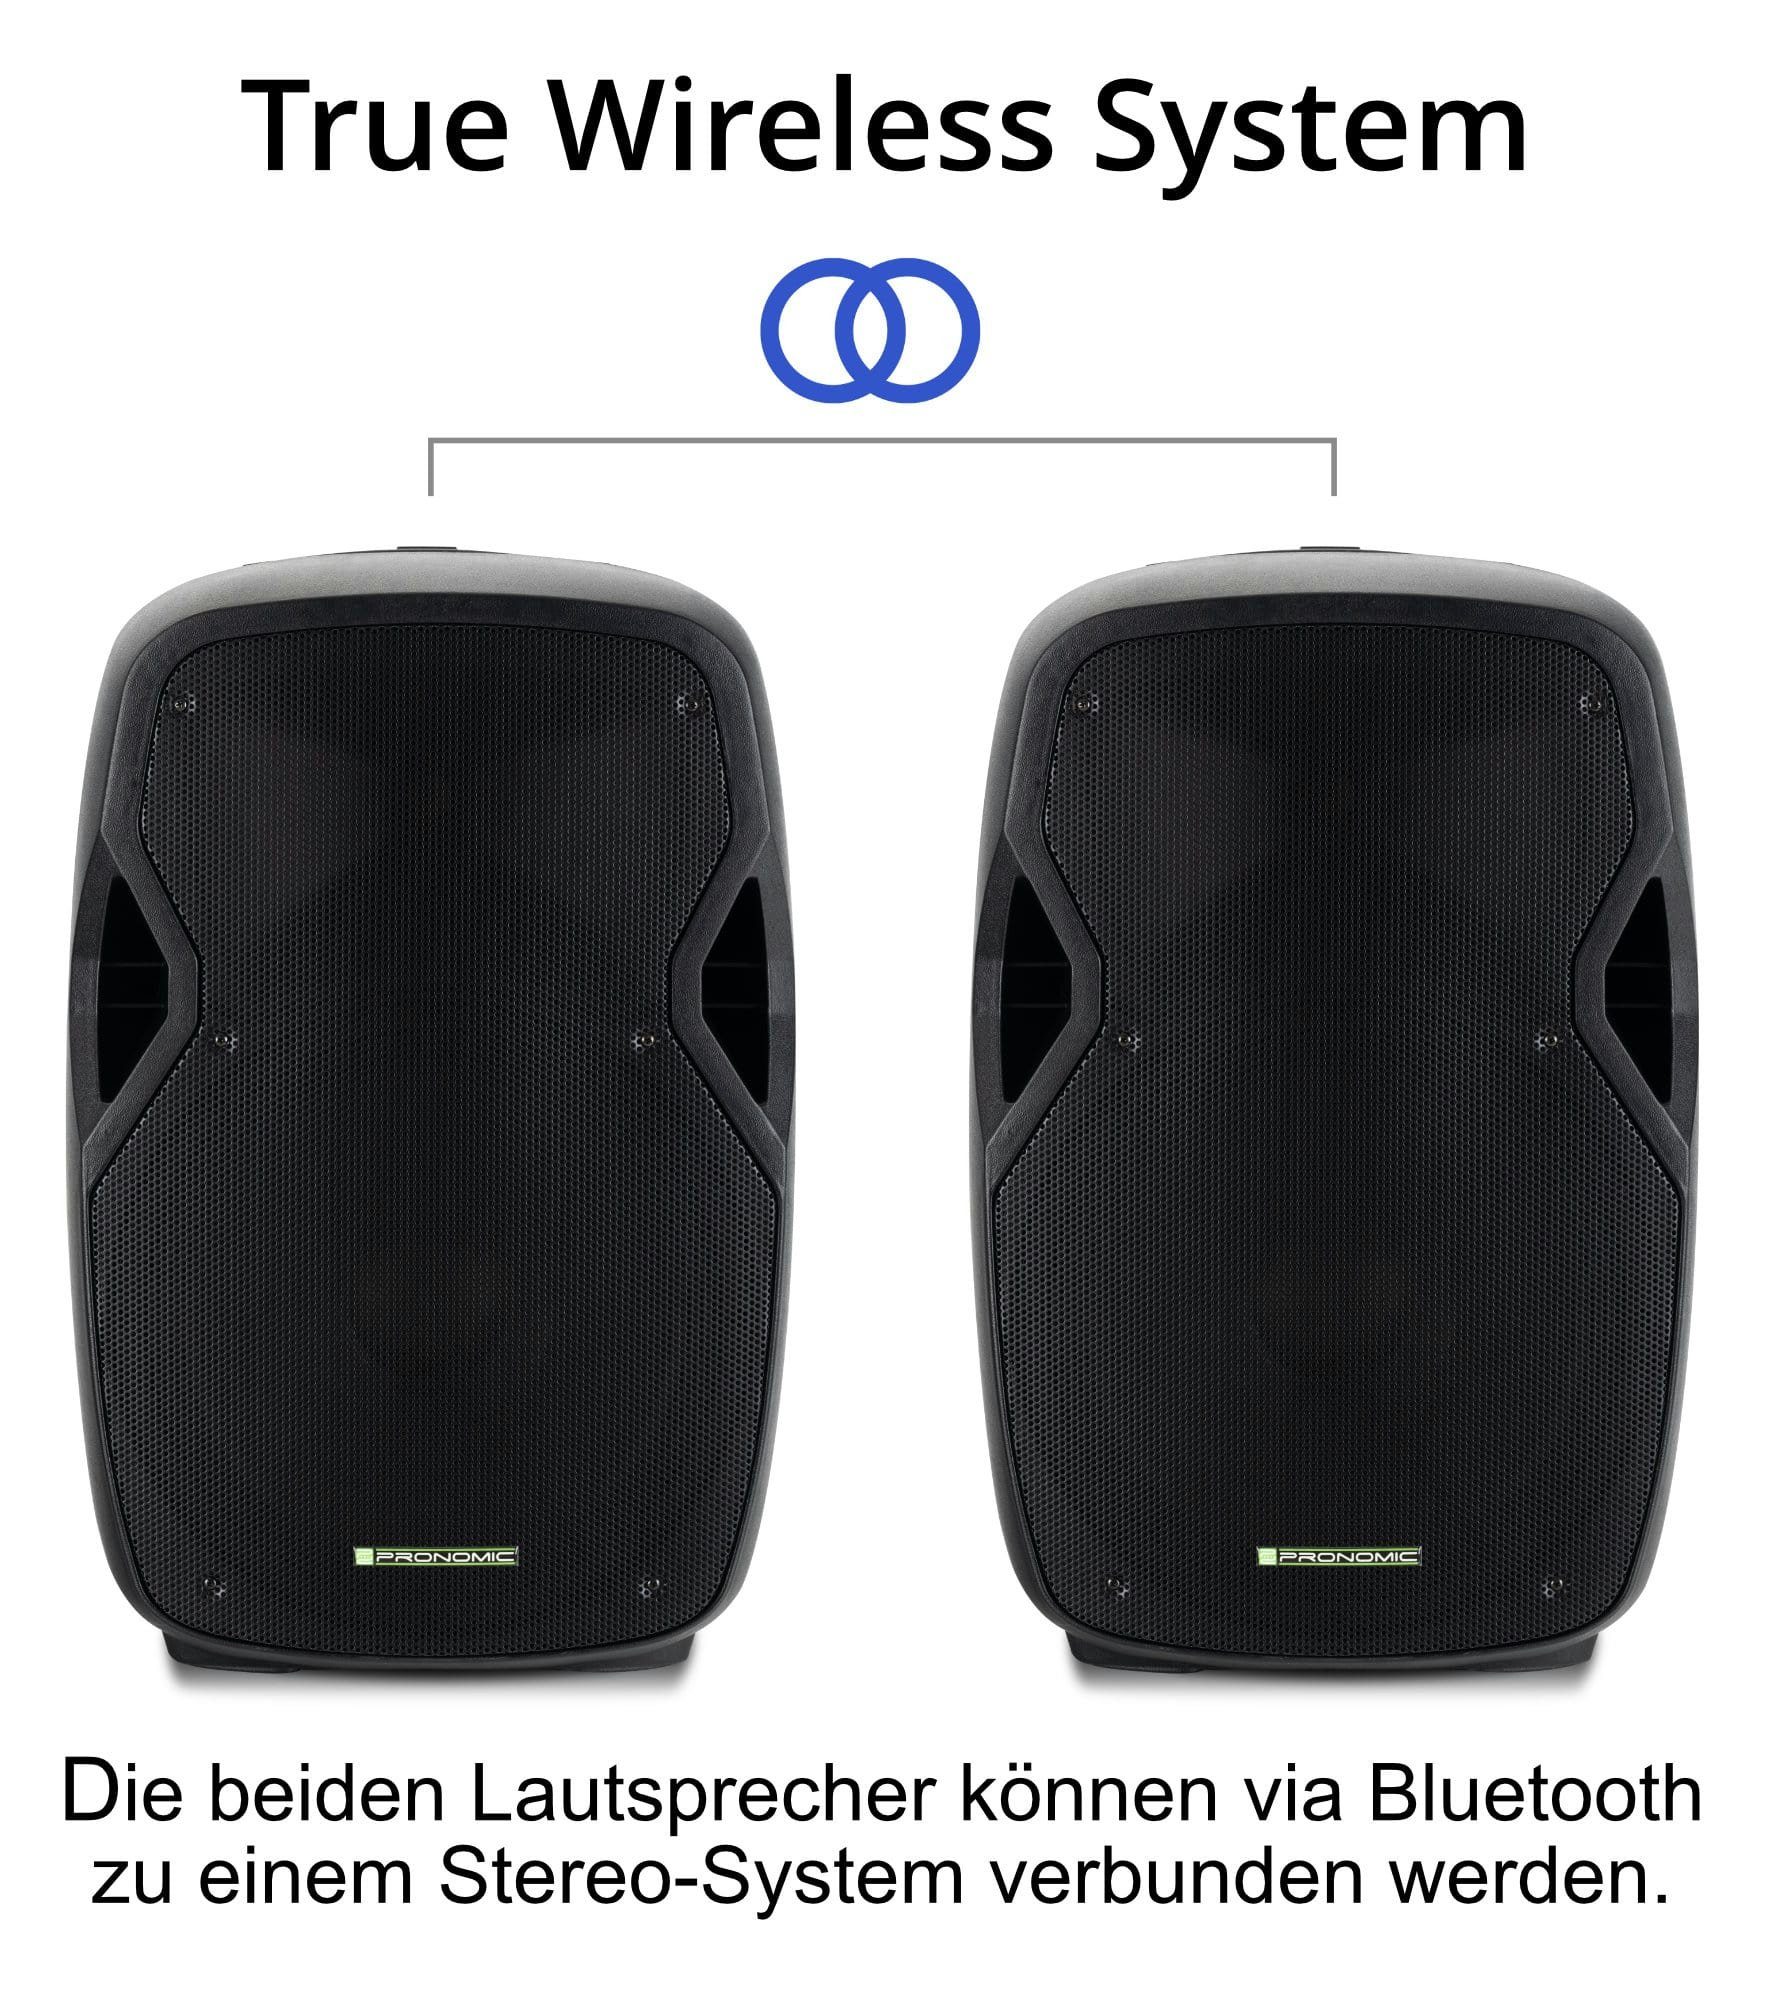 15MA-A 30 (Bluetooth-Schnittstelle, Akku-Aktivbox inkl. 15"-Woofer mit Lautsprecher Stereo TWS Funkmikrofone Funktion & Mobile - Pronomic Headsets) Soundanalage W, MOVE